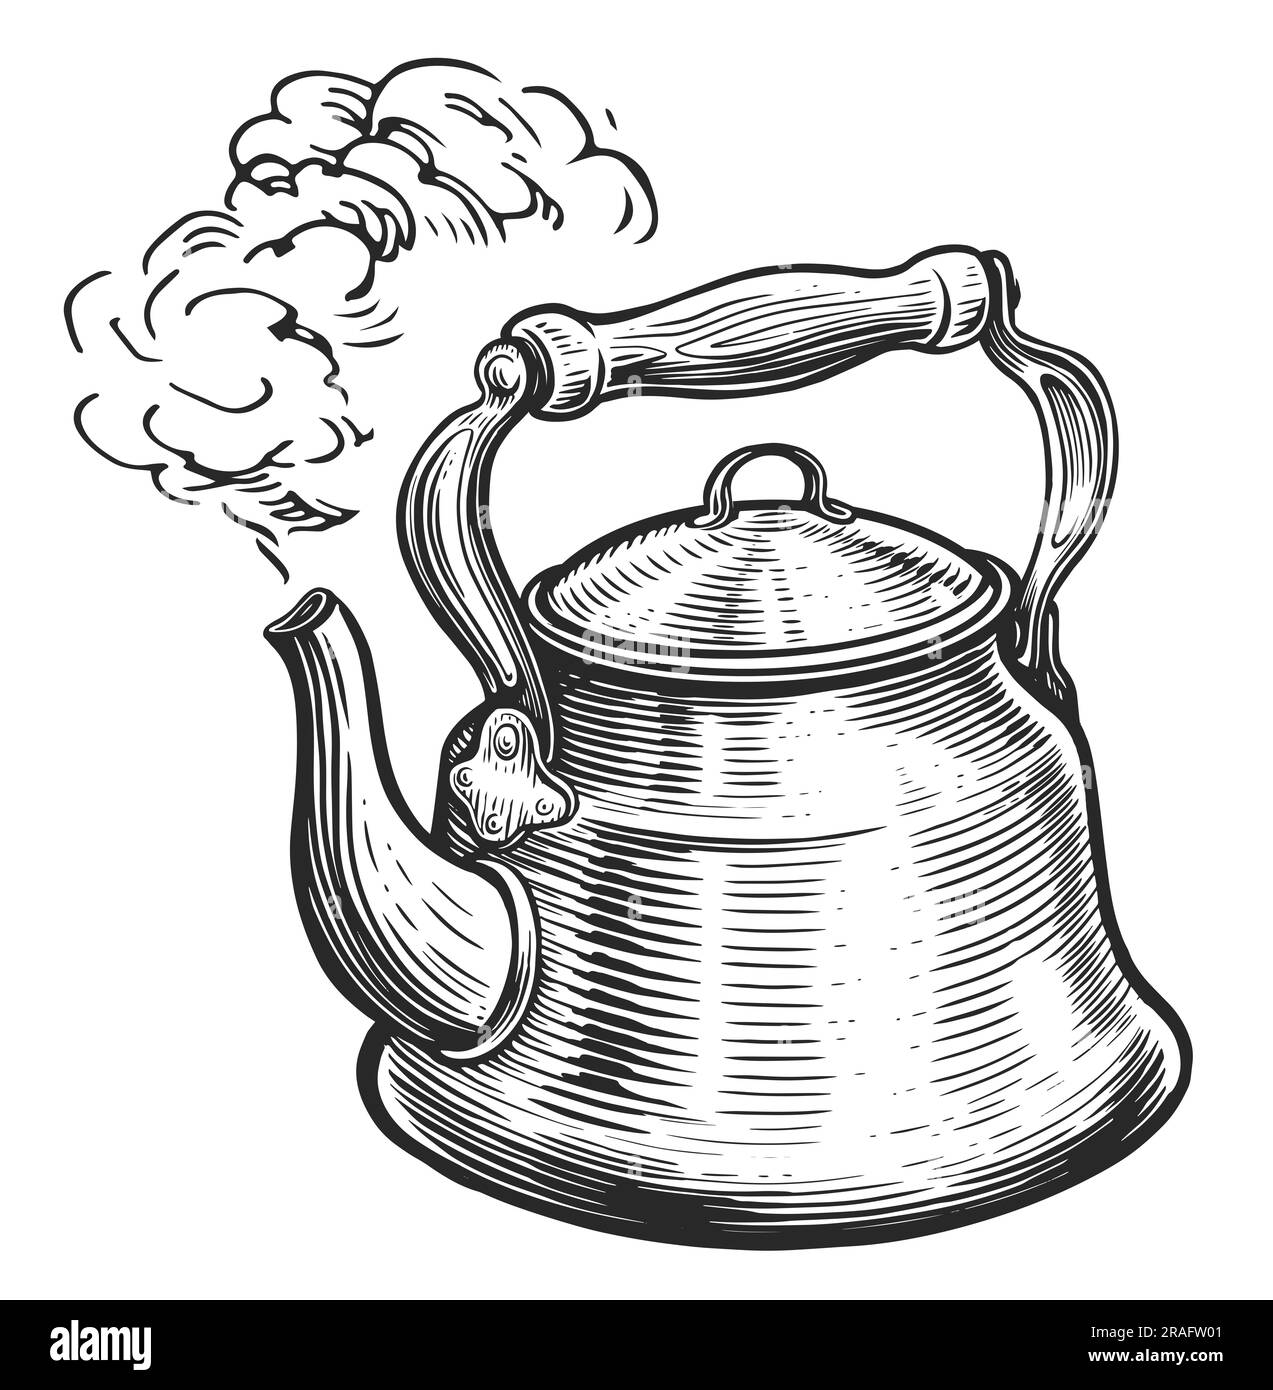 https://c8.alamy.com/comp/2RAFW01/boiling-kettle-and-steam-sketch-vintage-illustration-2RAFW01.jpg